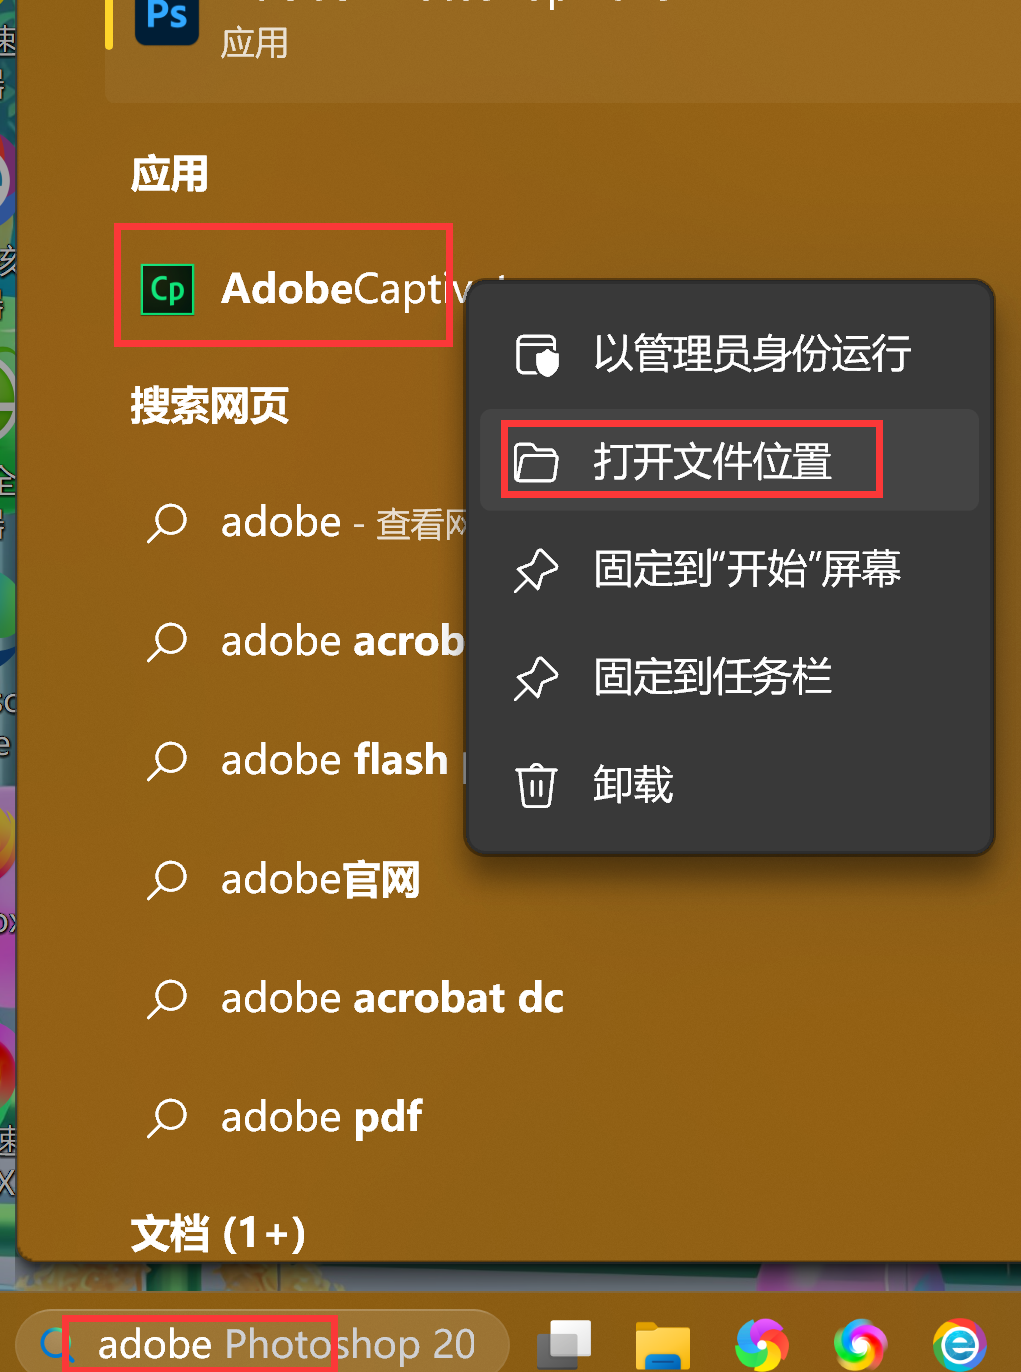 Adobe Captivate 2019(多媒体课程创建) v11.5.5.553 中文永久使用下载